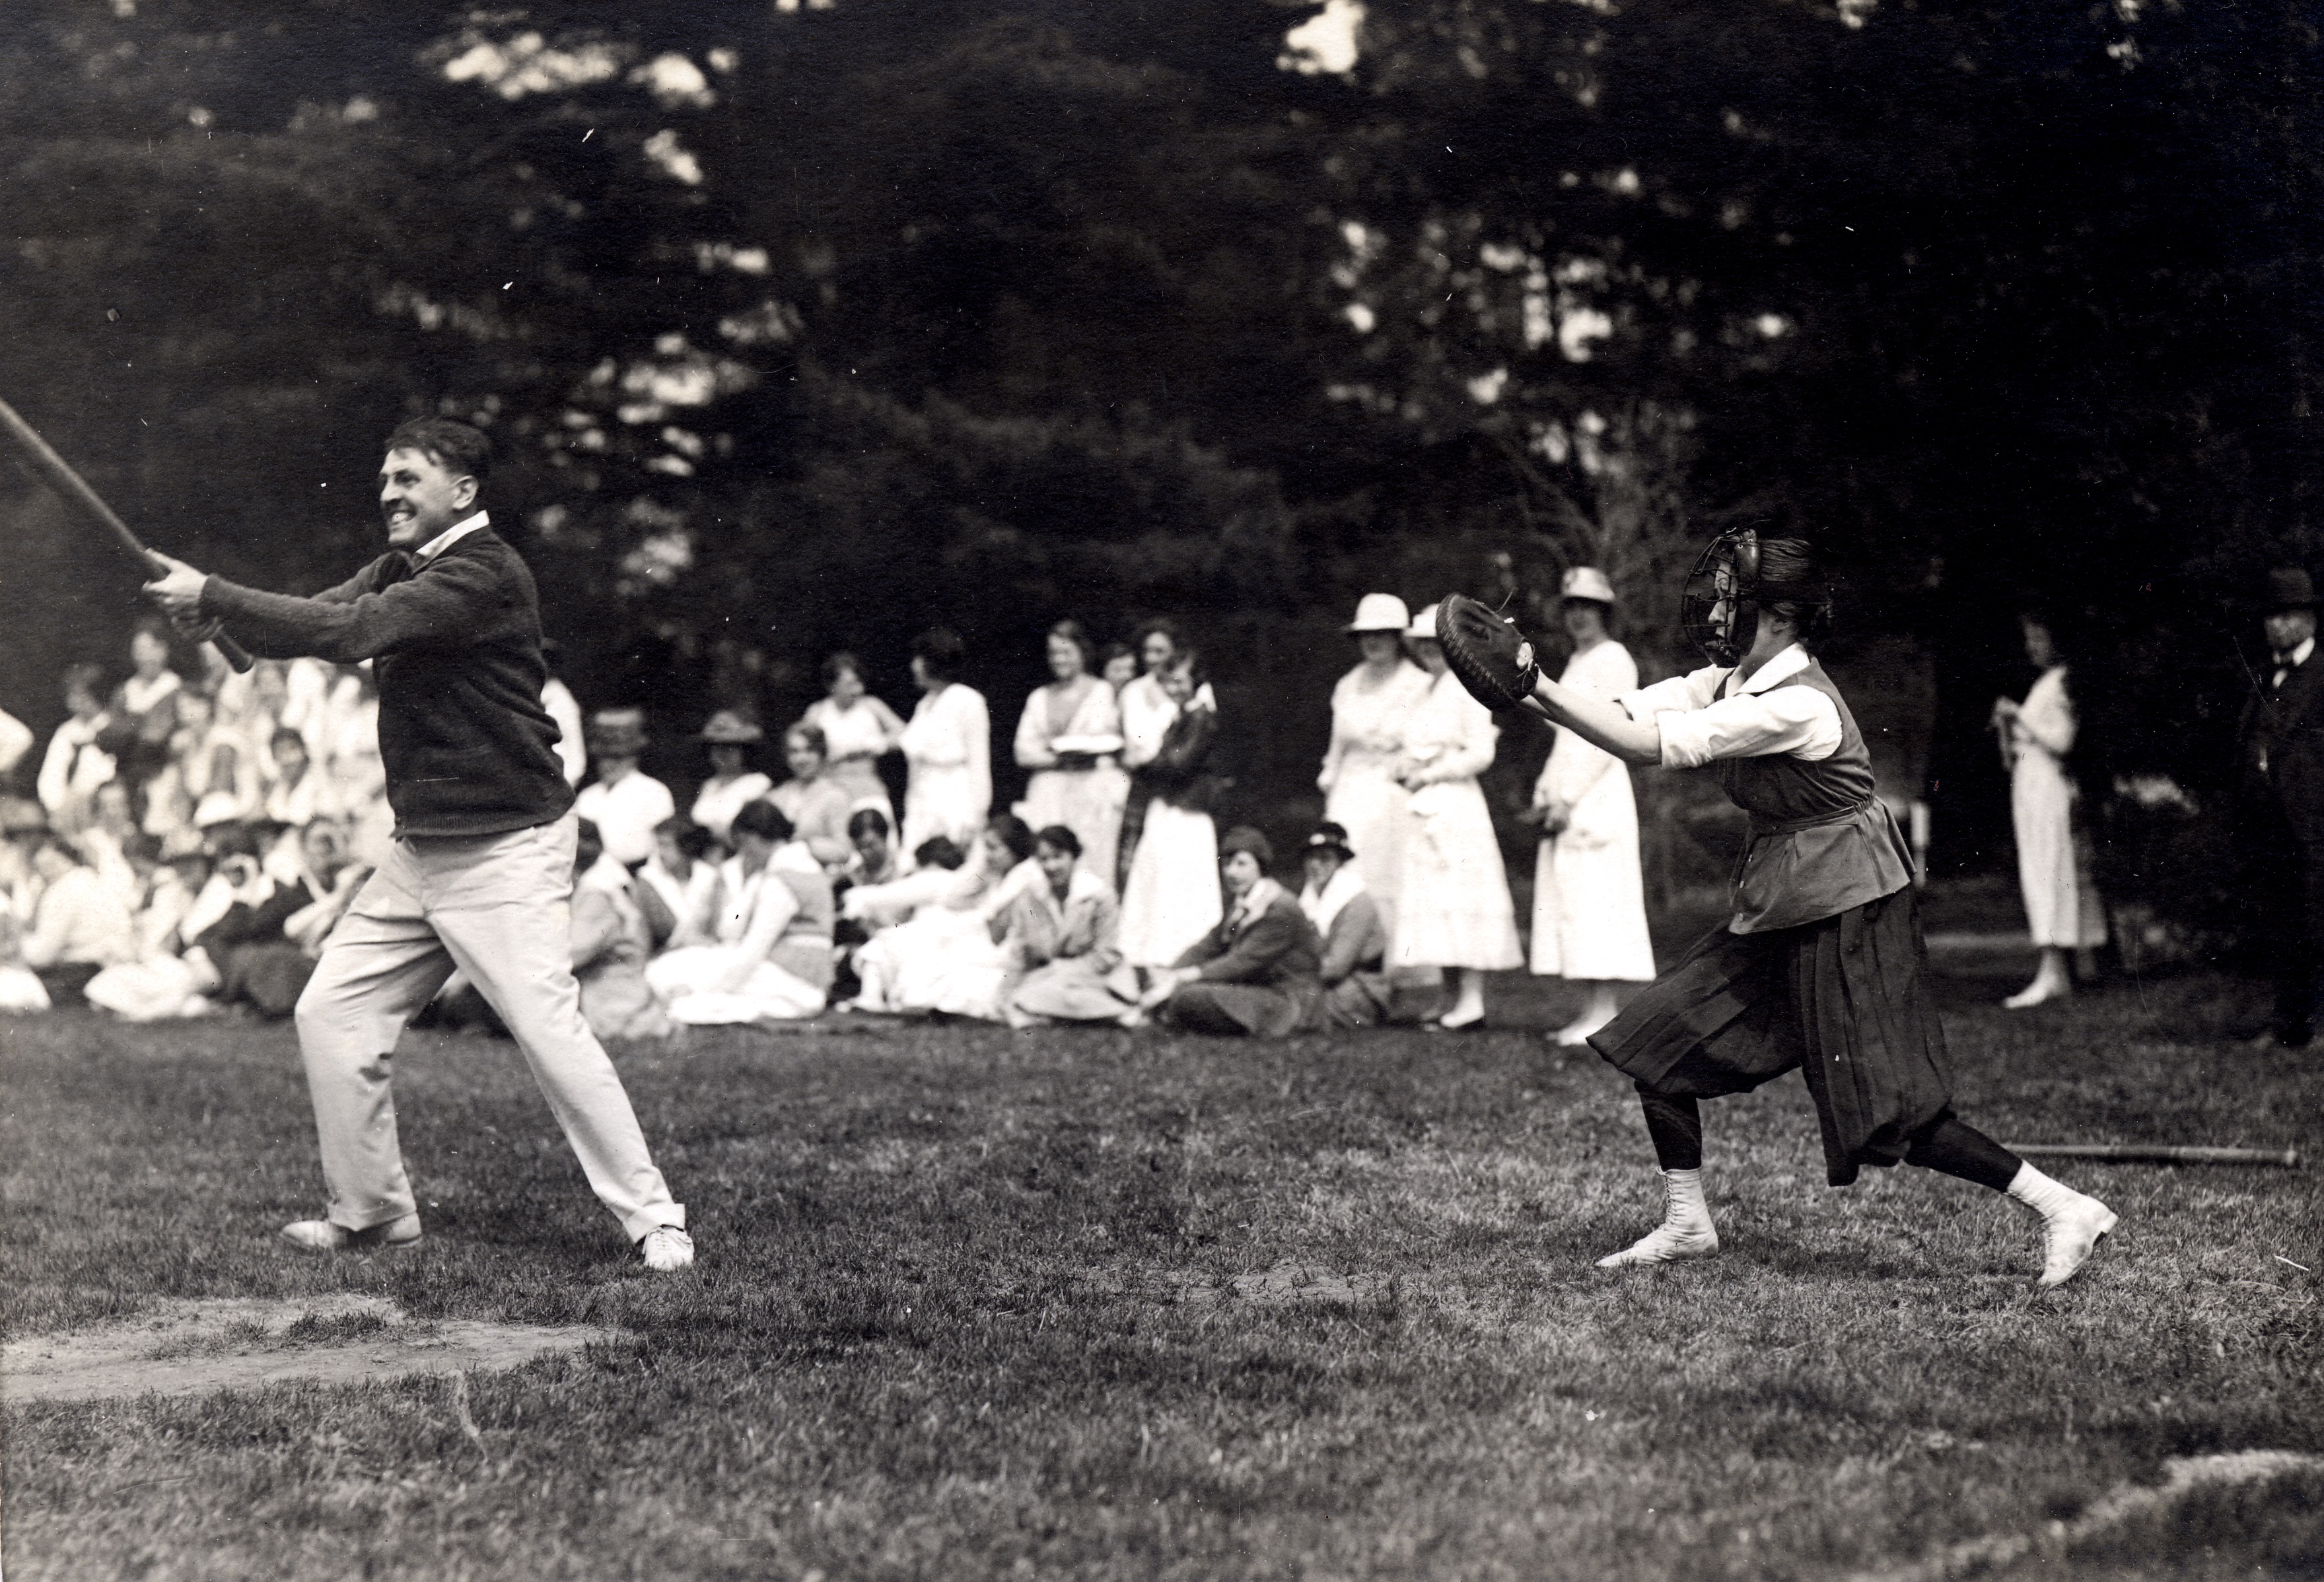 Founder\'s Day baseball game, 1918 - Henry Noble MacCracken taking a swing